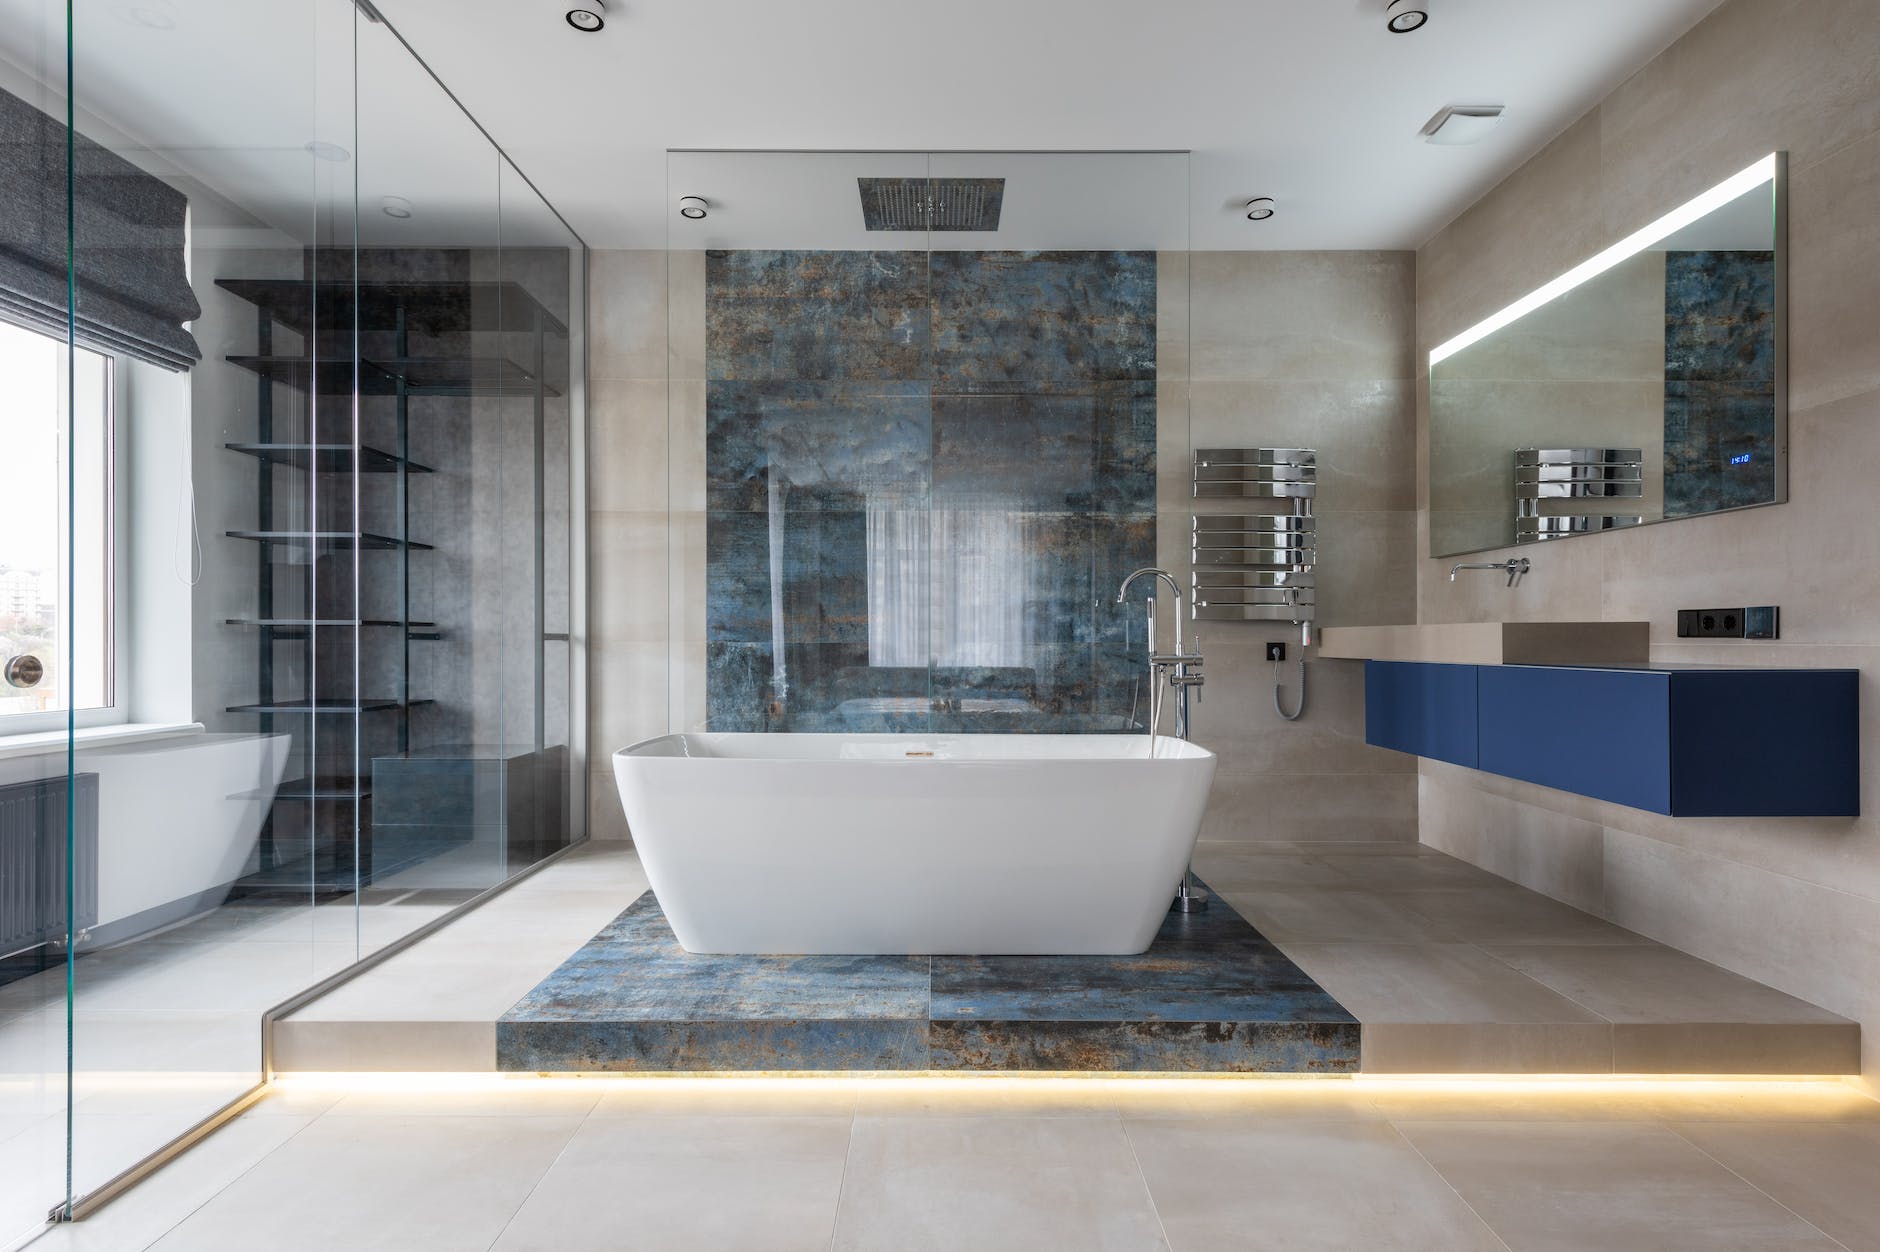 modern bathroom interior with freestanding tub